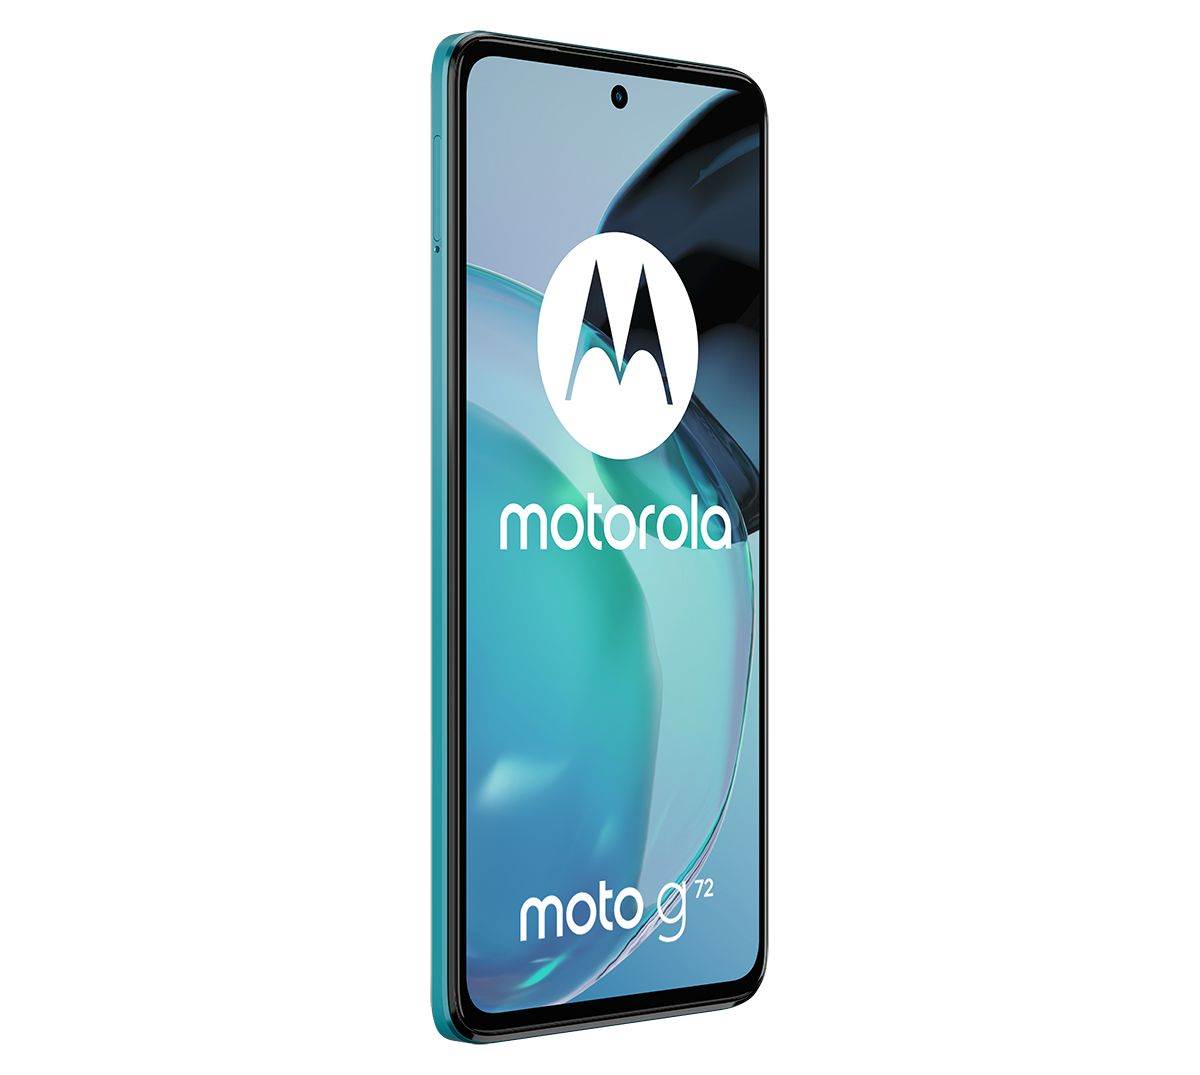  Motorola g72 Polar Blue (3).jpg 